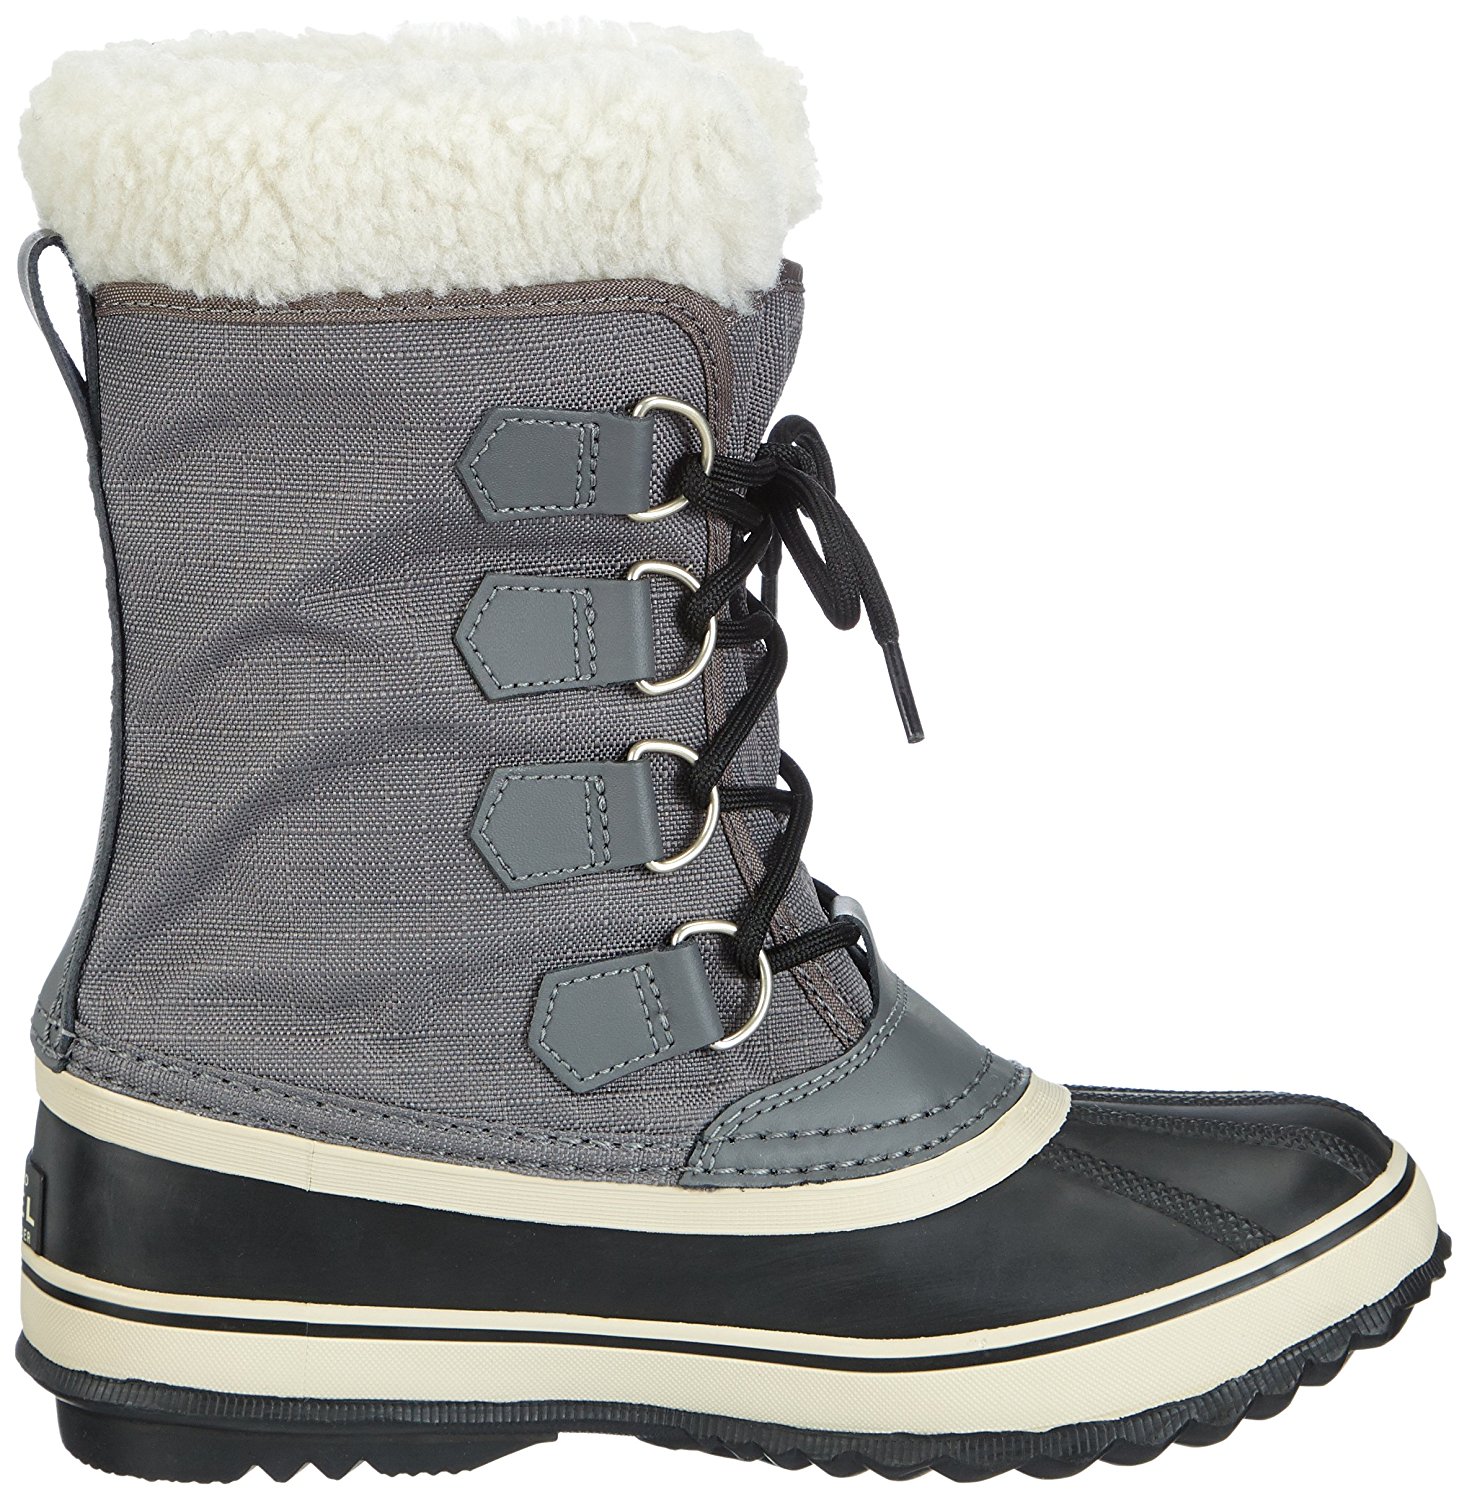 SOREL Women's Winter Carnival Snow Boot, Pewter/Black, Size 7.5 qH2M ...